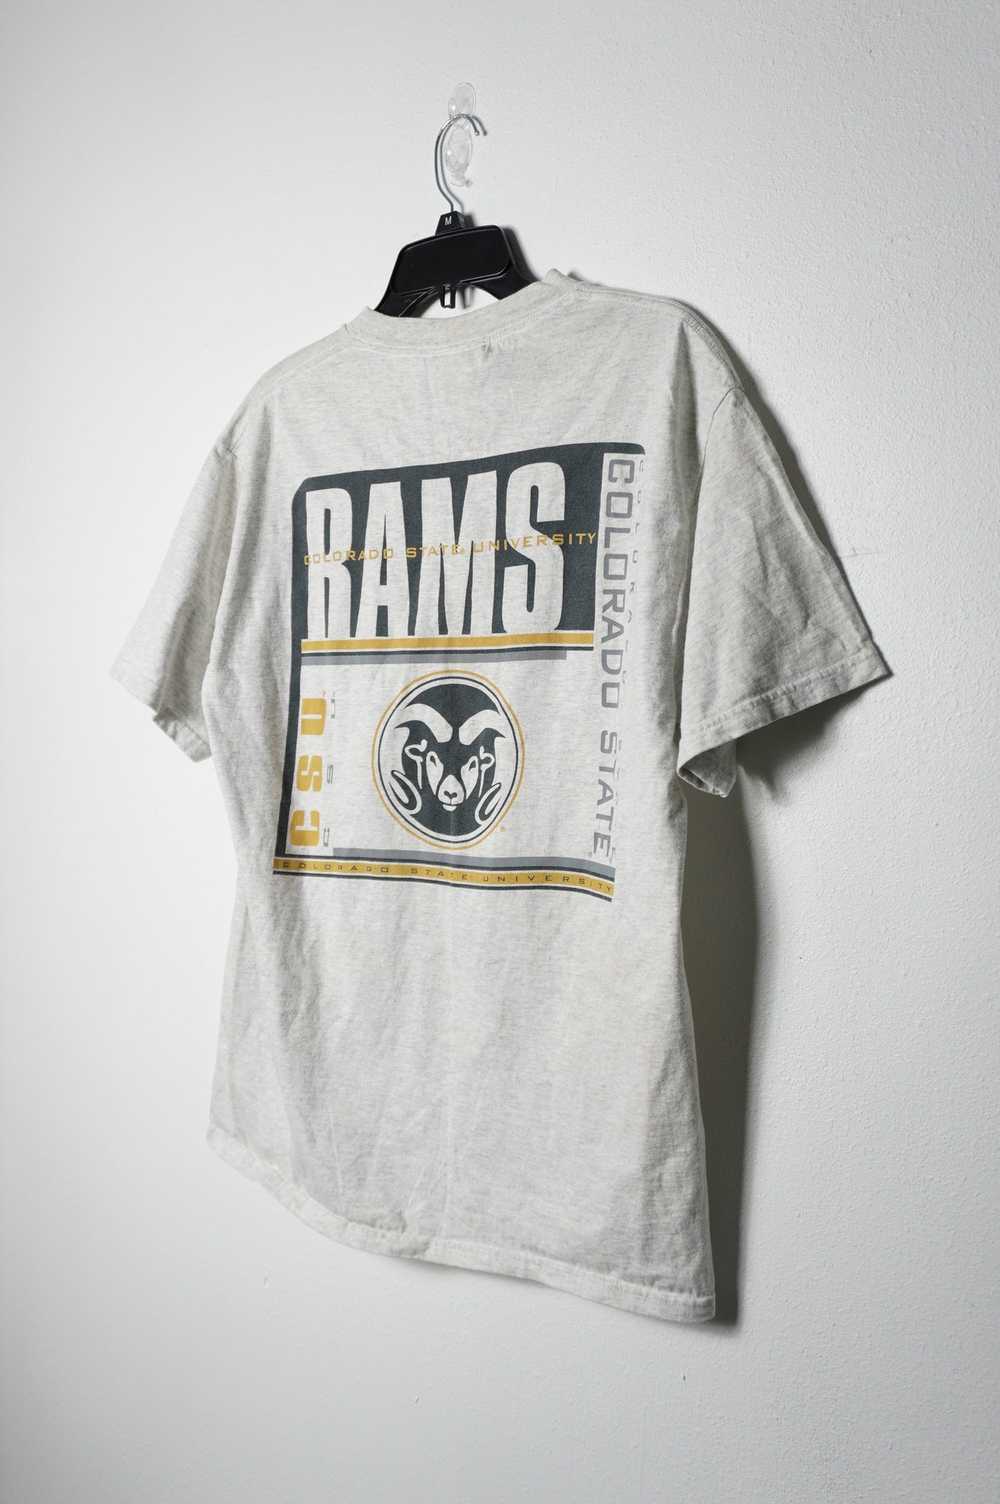 Jansport C.S.U Rams Shirt Vintage - image 4